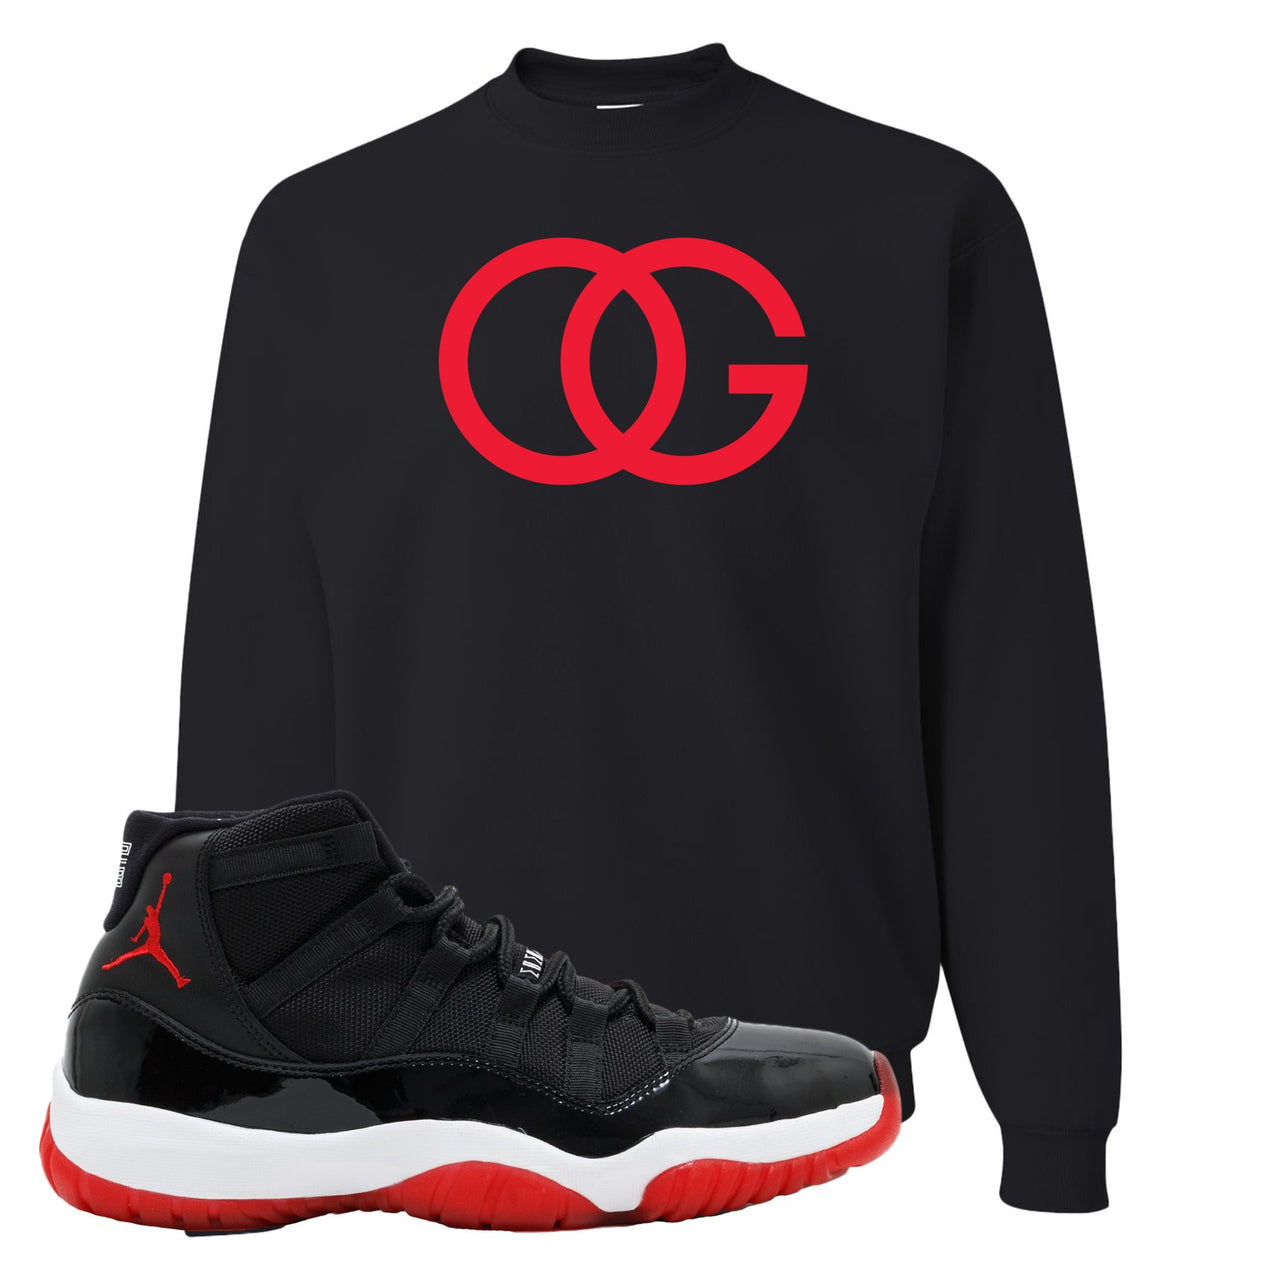 Jordan 11 Bred OG Black Sneaker Hook Up Crewneck Sweatshirt